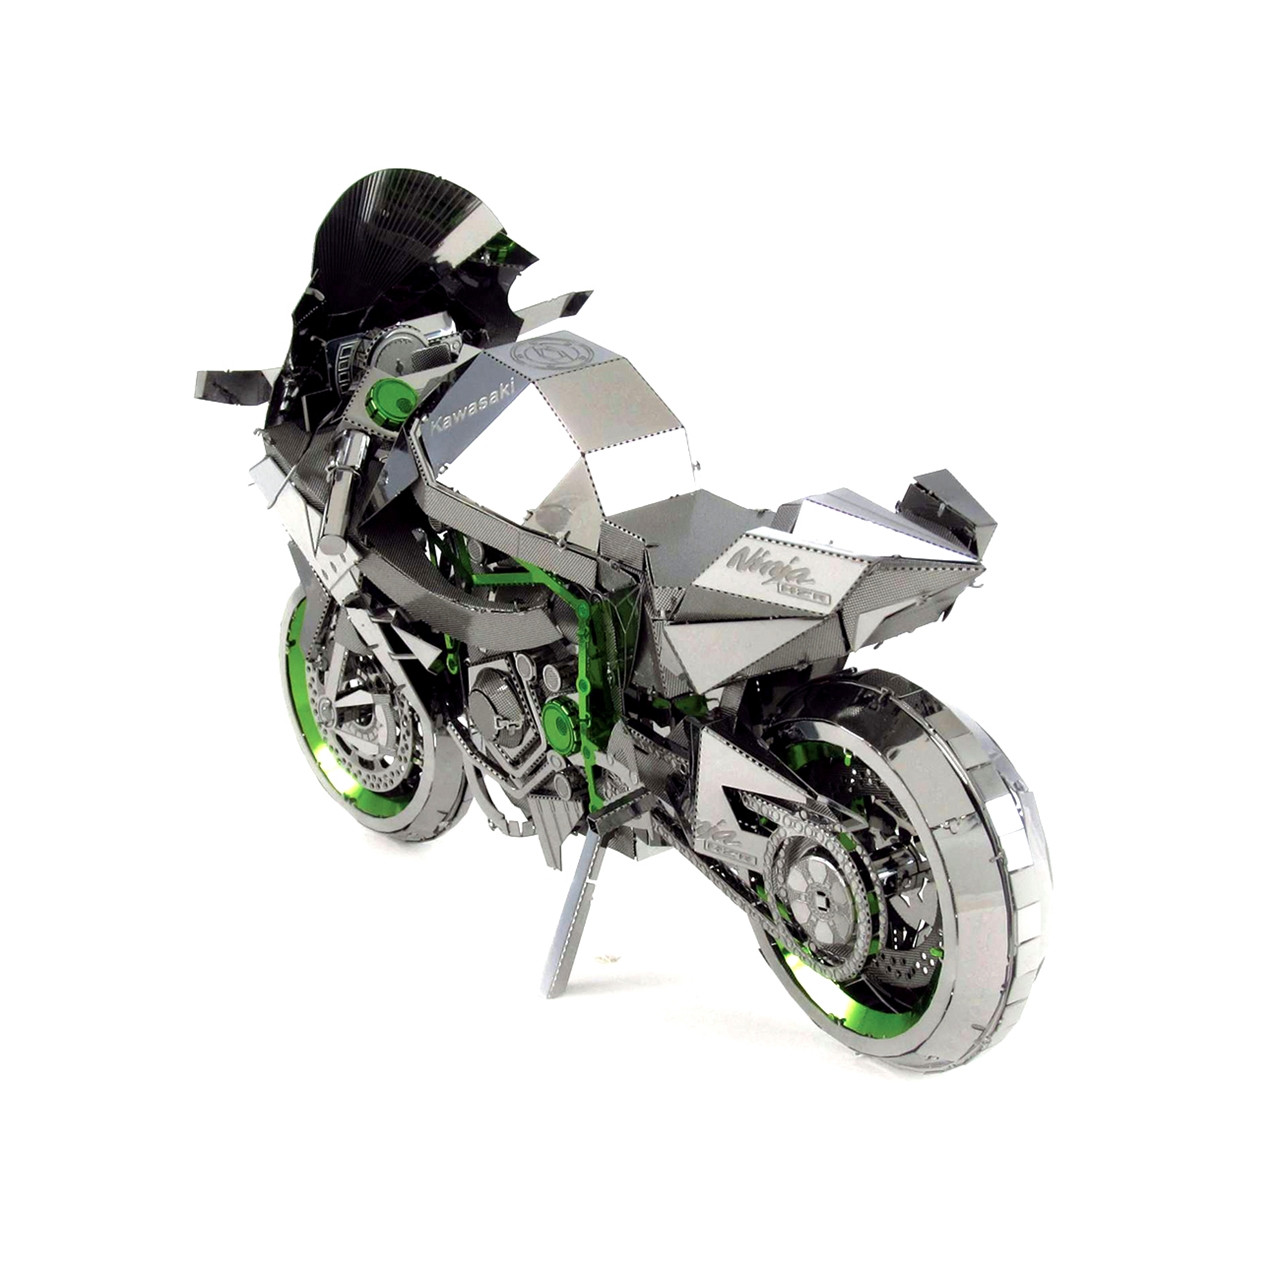 Best ideas about DIY Motorcycle Kit
. Save or Pin Metal Earth H2R Kawasaki Ninja 3D Laser Cut DIY Model Now.